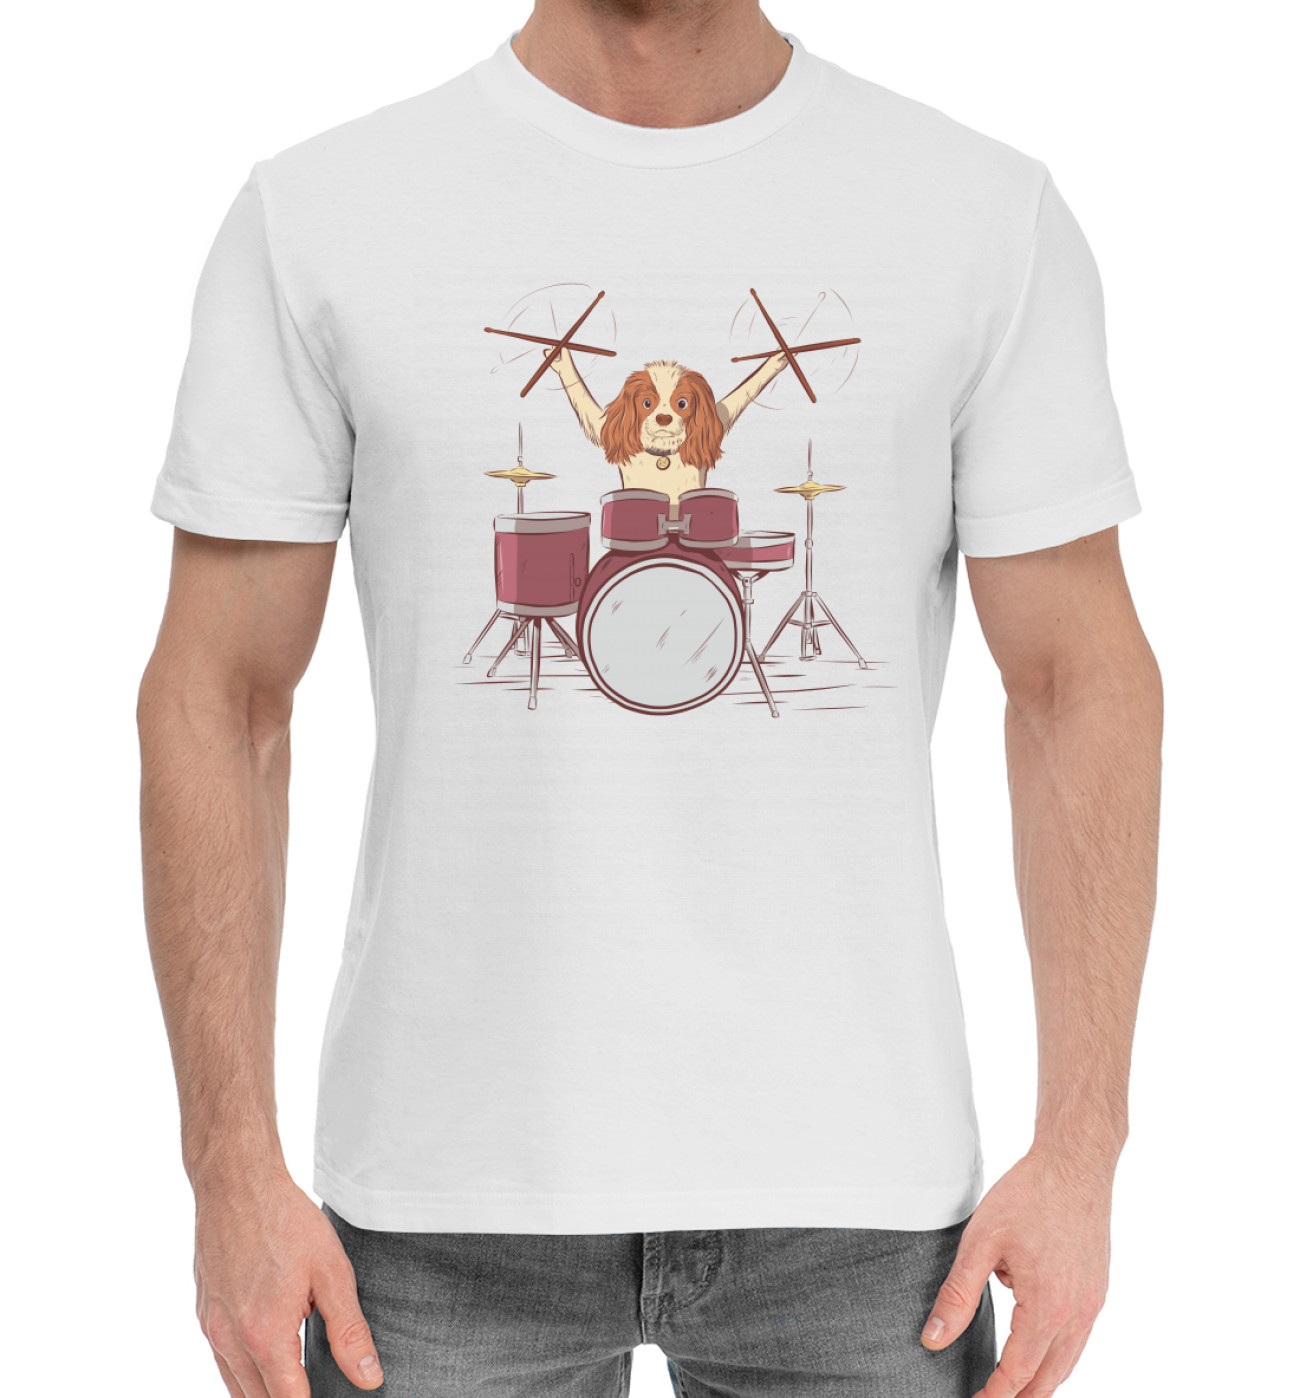 Мужская Хлопковая футболка Барабанщик, артикул: DOG-960216-hfu-2